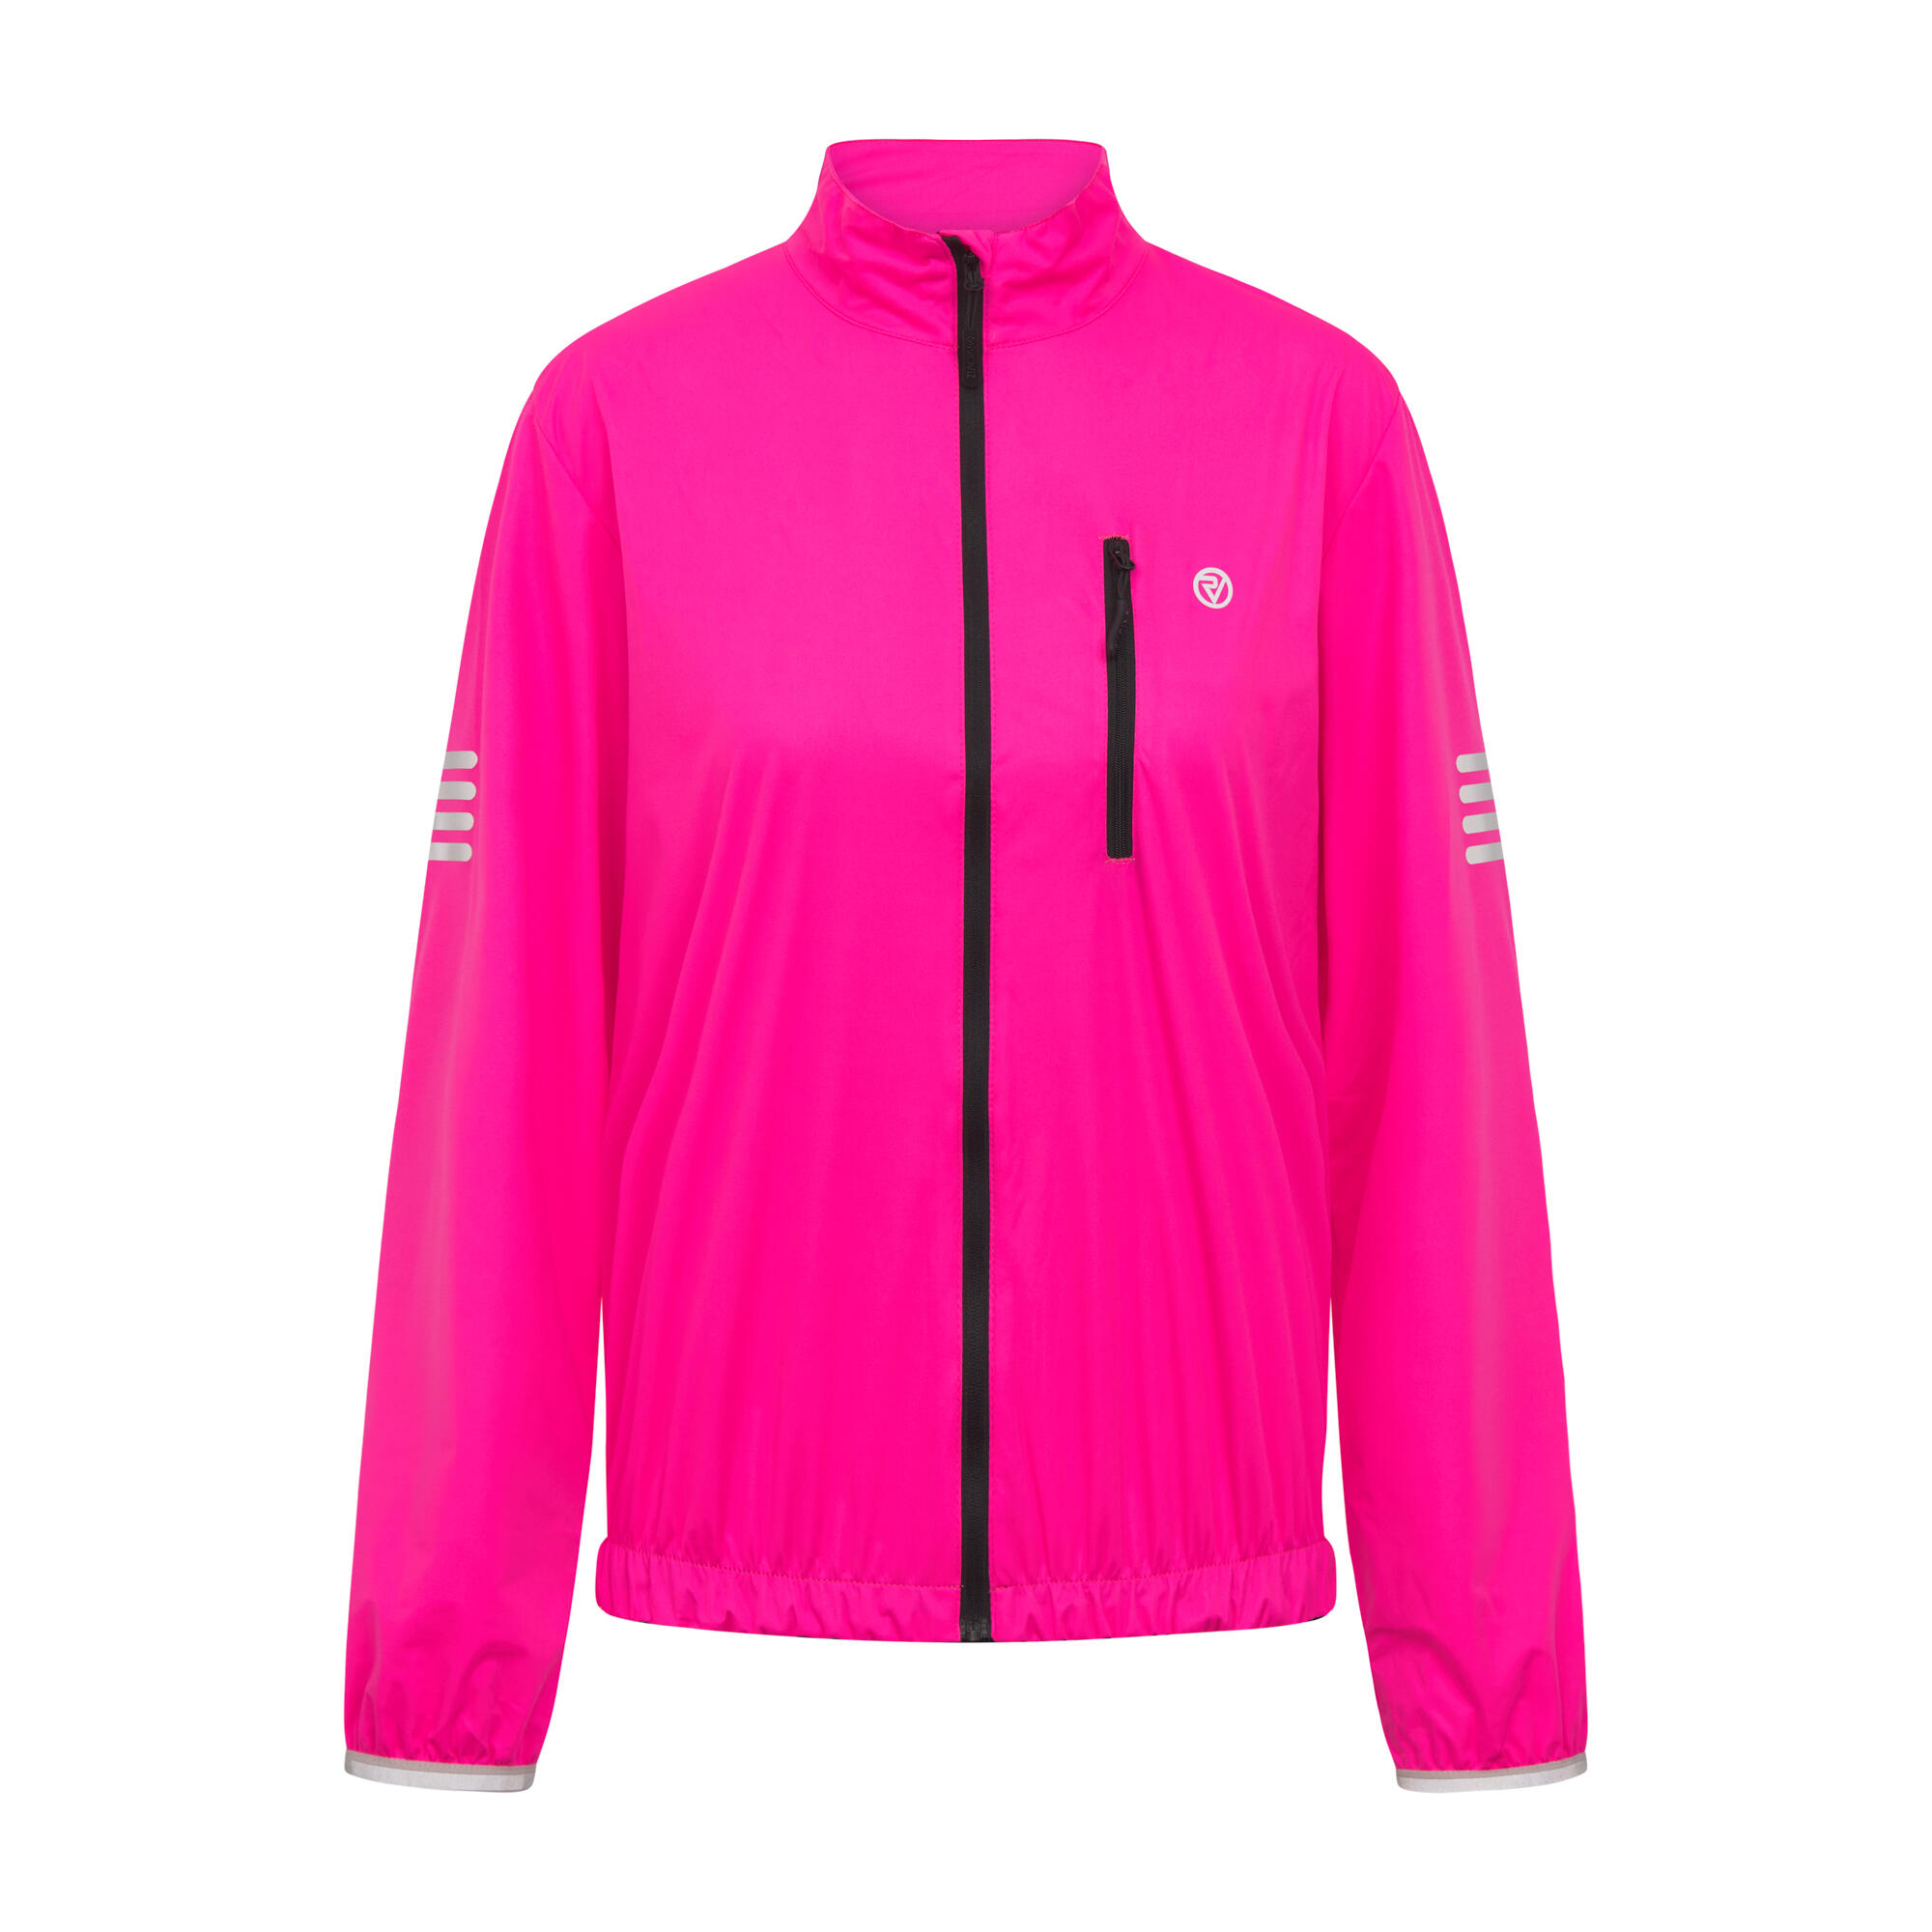 Proviz Reflective Lightweight Unisex Windproof Cycling Jacket 6/7